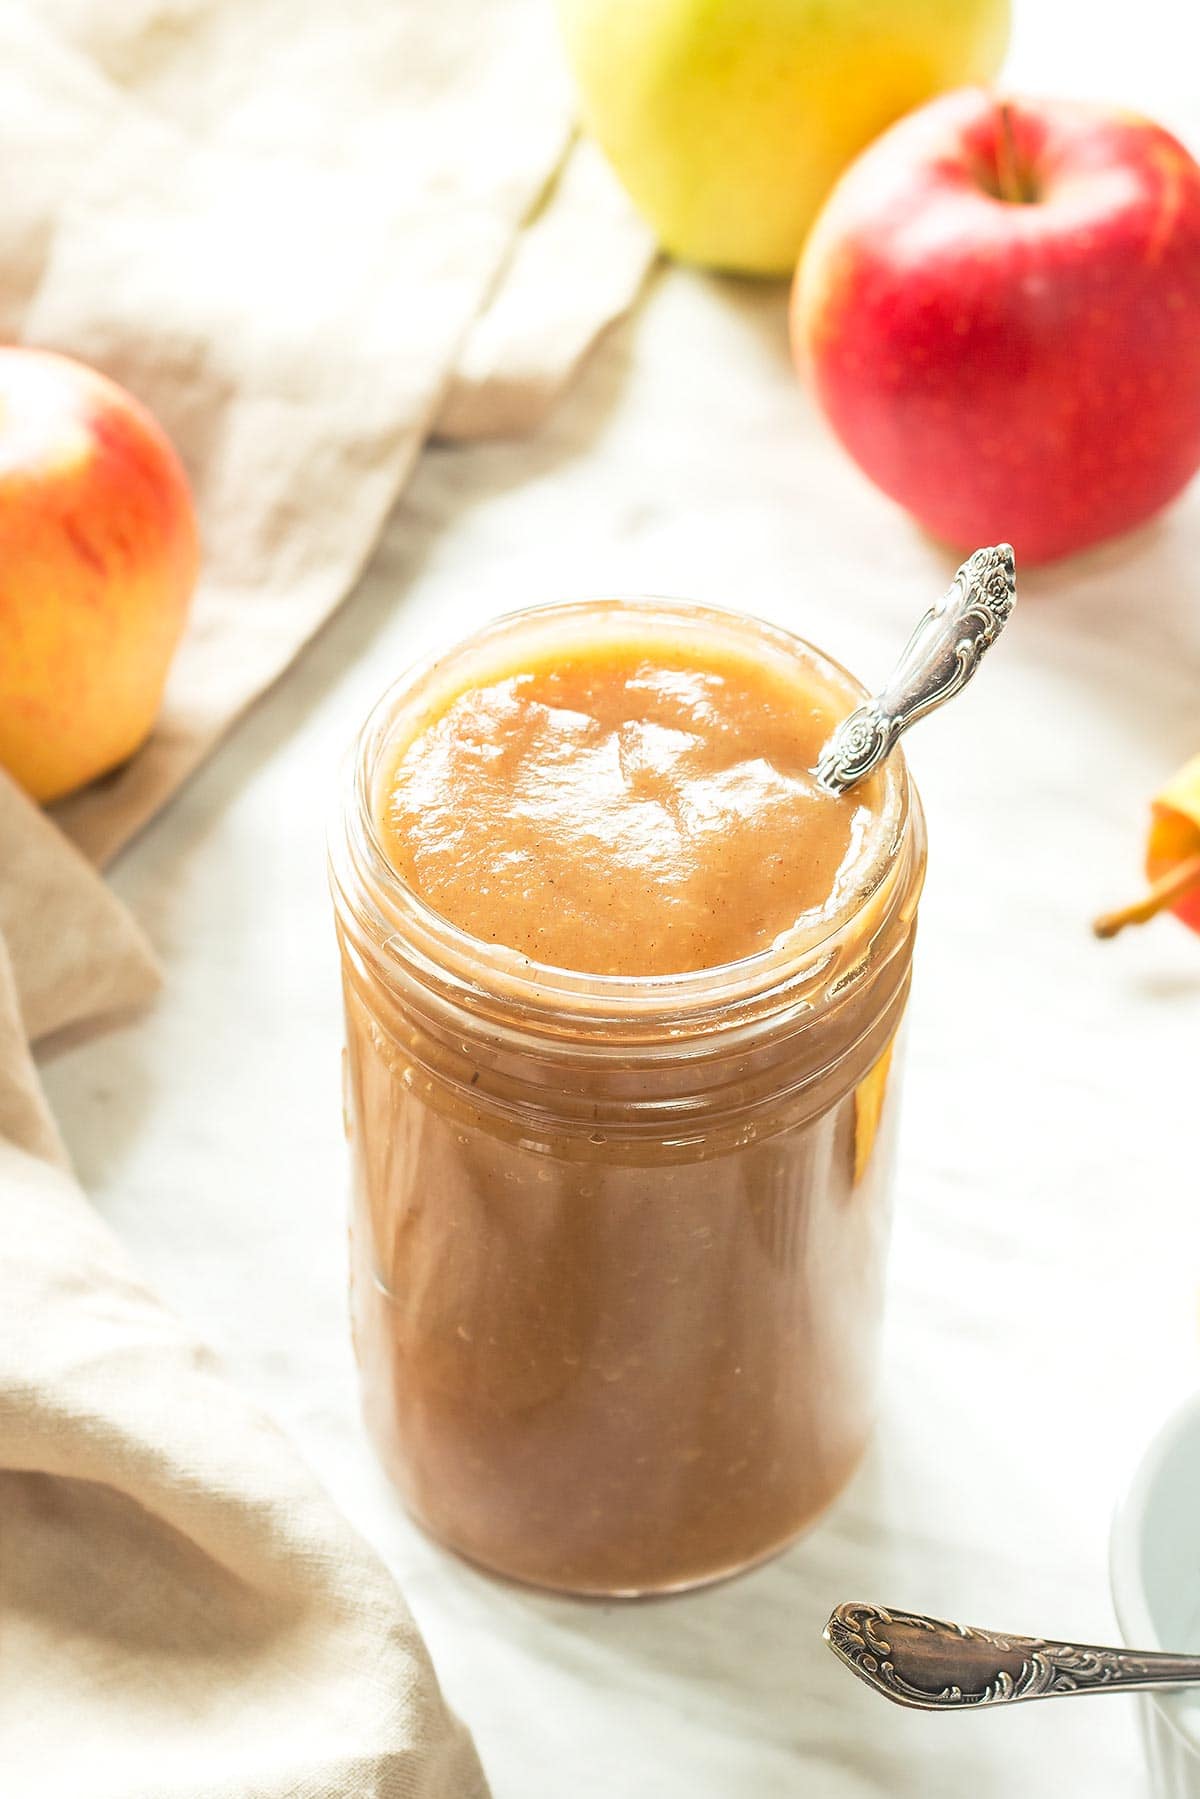 Best Applesauce Recipe In Mason Jar